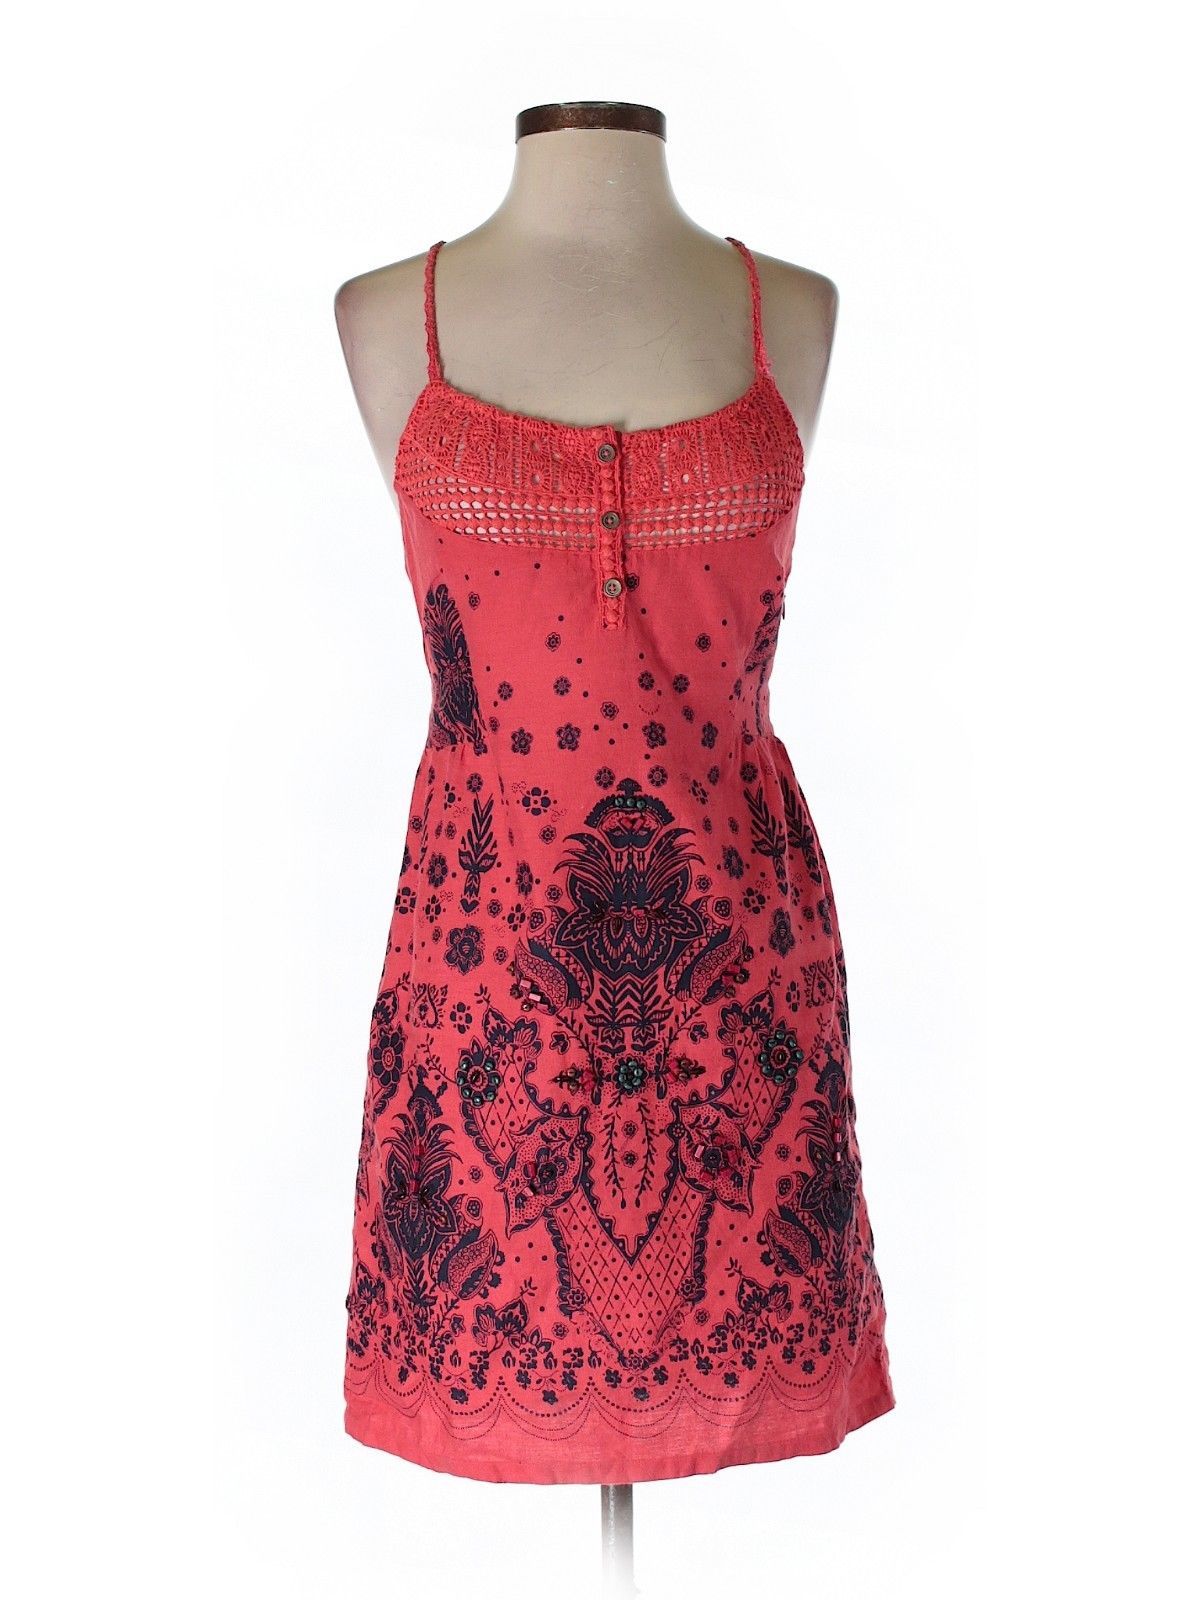 New Free People Long Sleeve Rubi Lace Mini Dress $128 M L Ivory